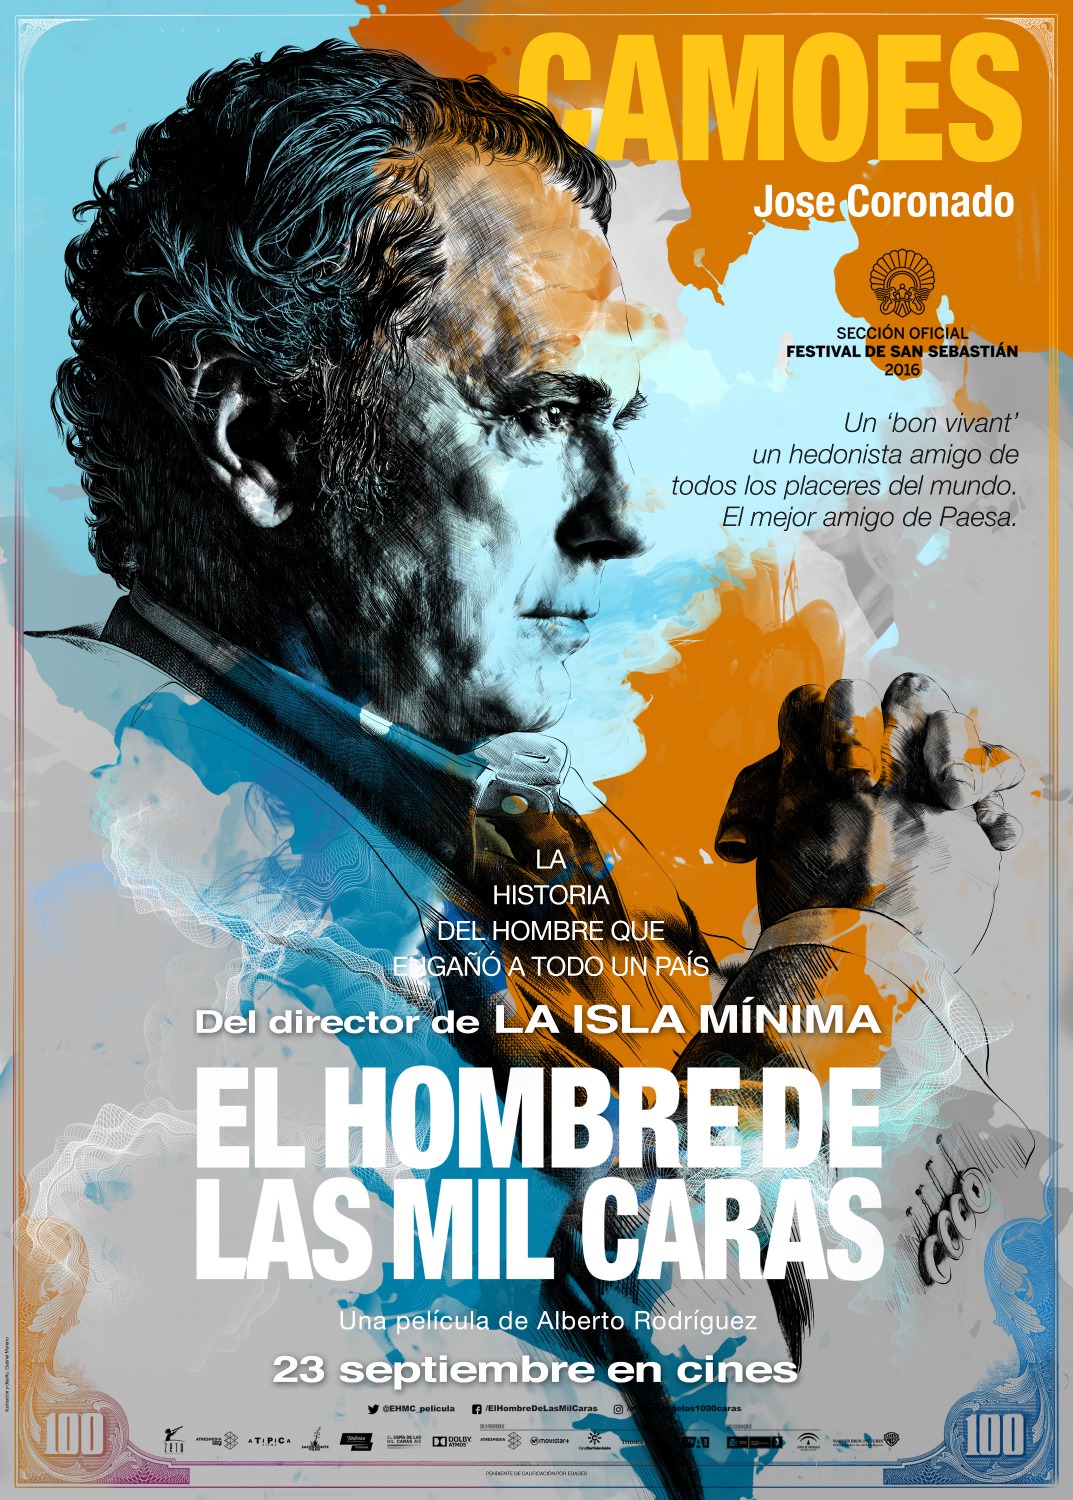 Extra Large Movie Poster Image for El hombre de las mil caras (#3 of 7)